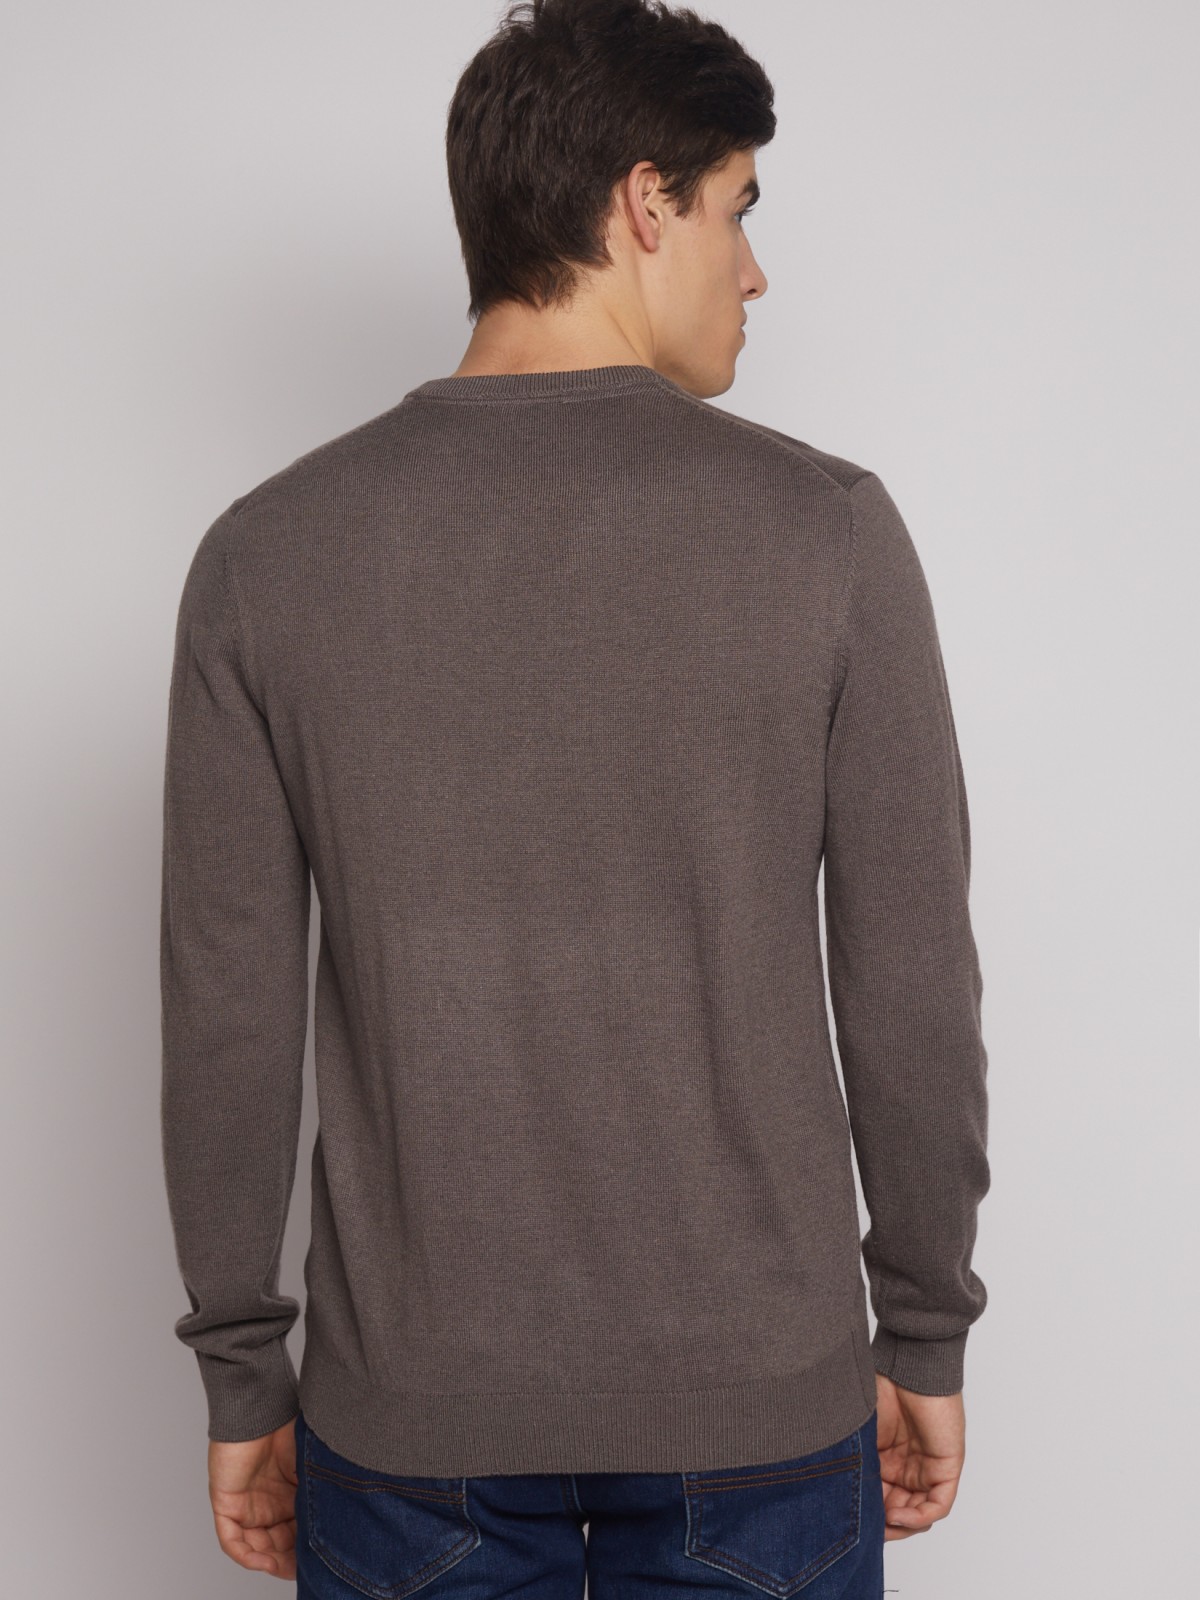 Тёплый трикотажный пуловер zolla 012426163052, цвет коричневый, размер M - фото 6